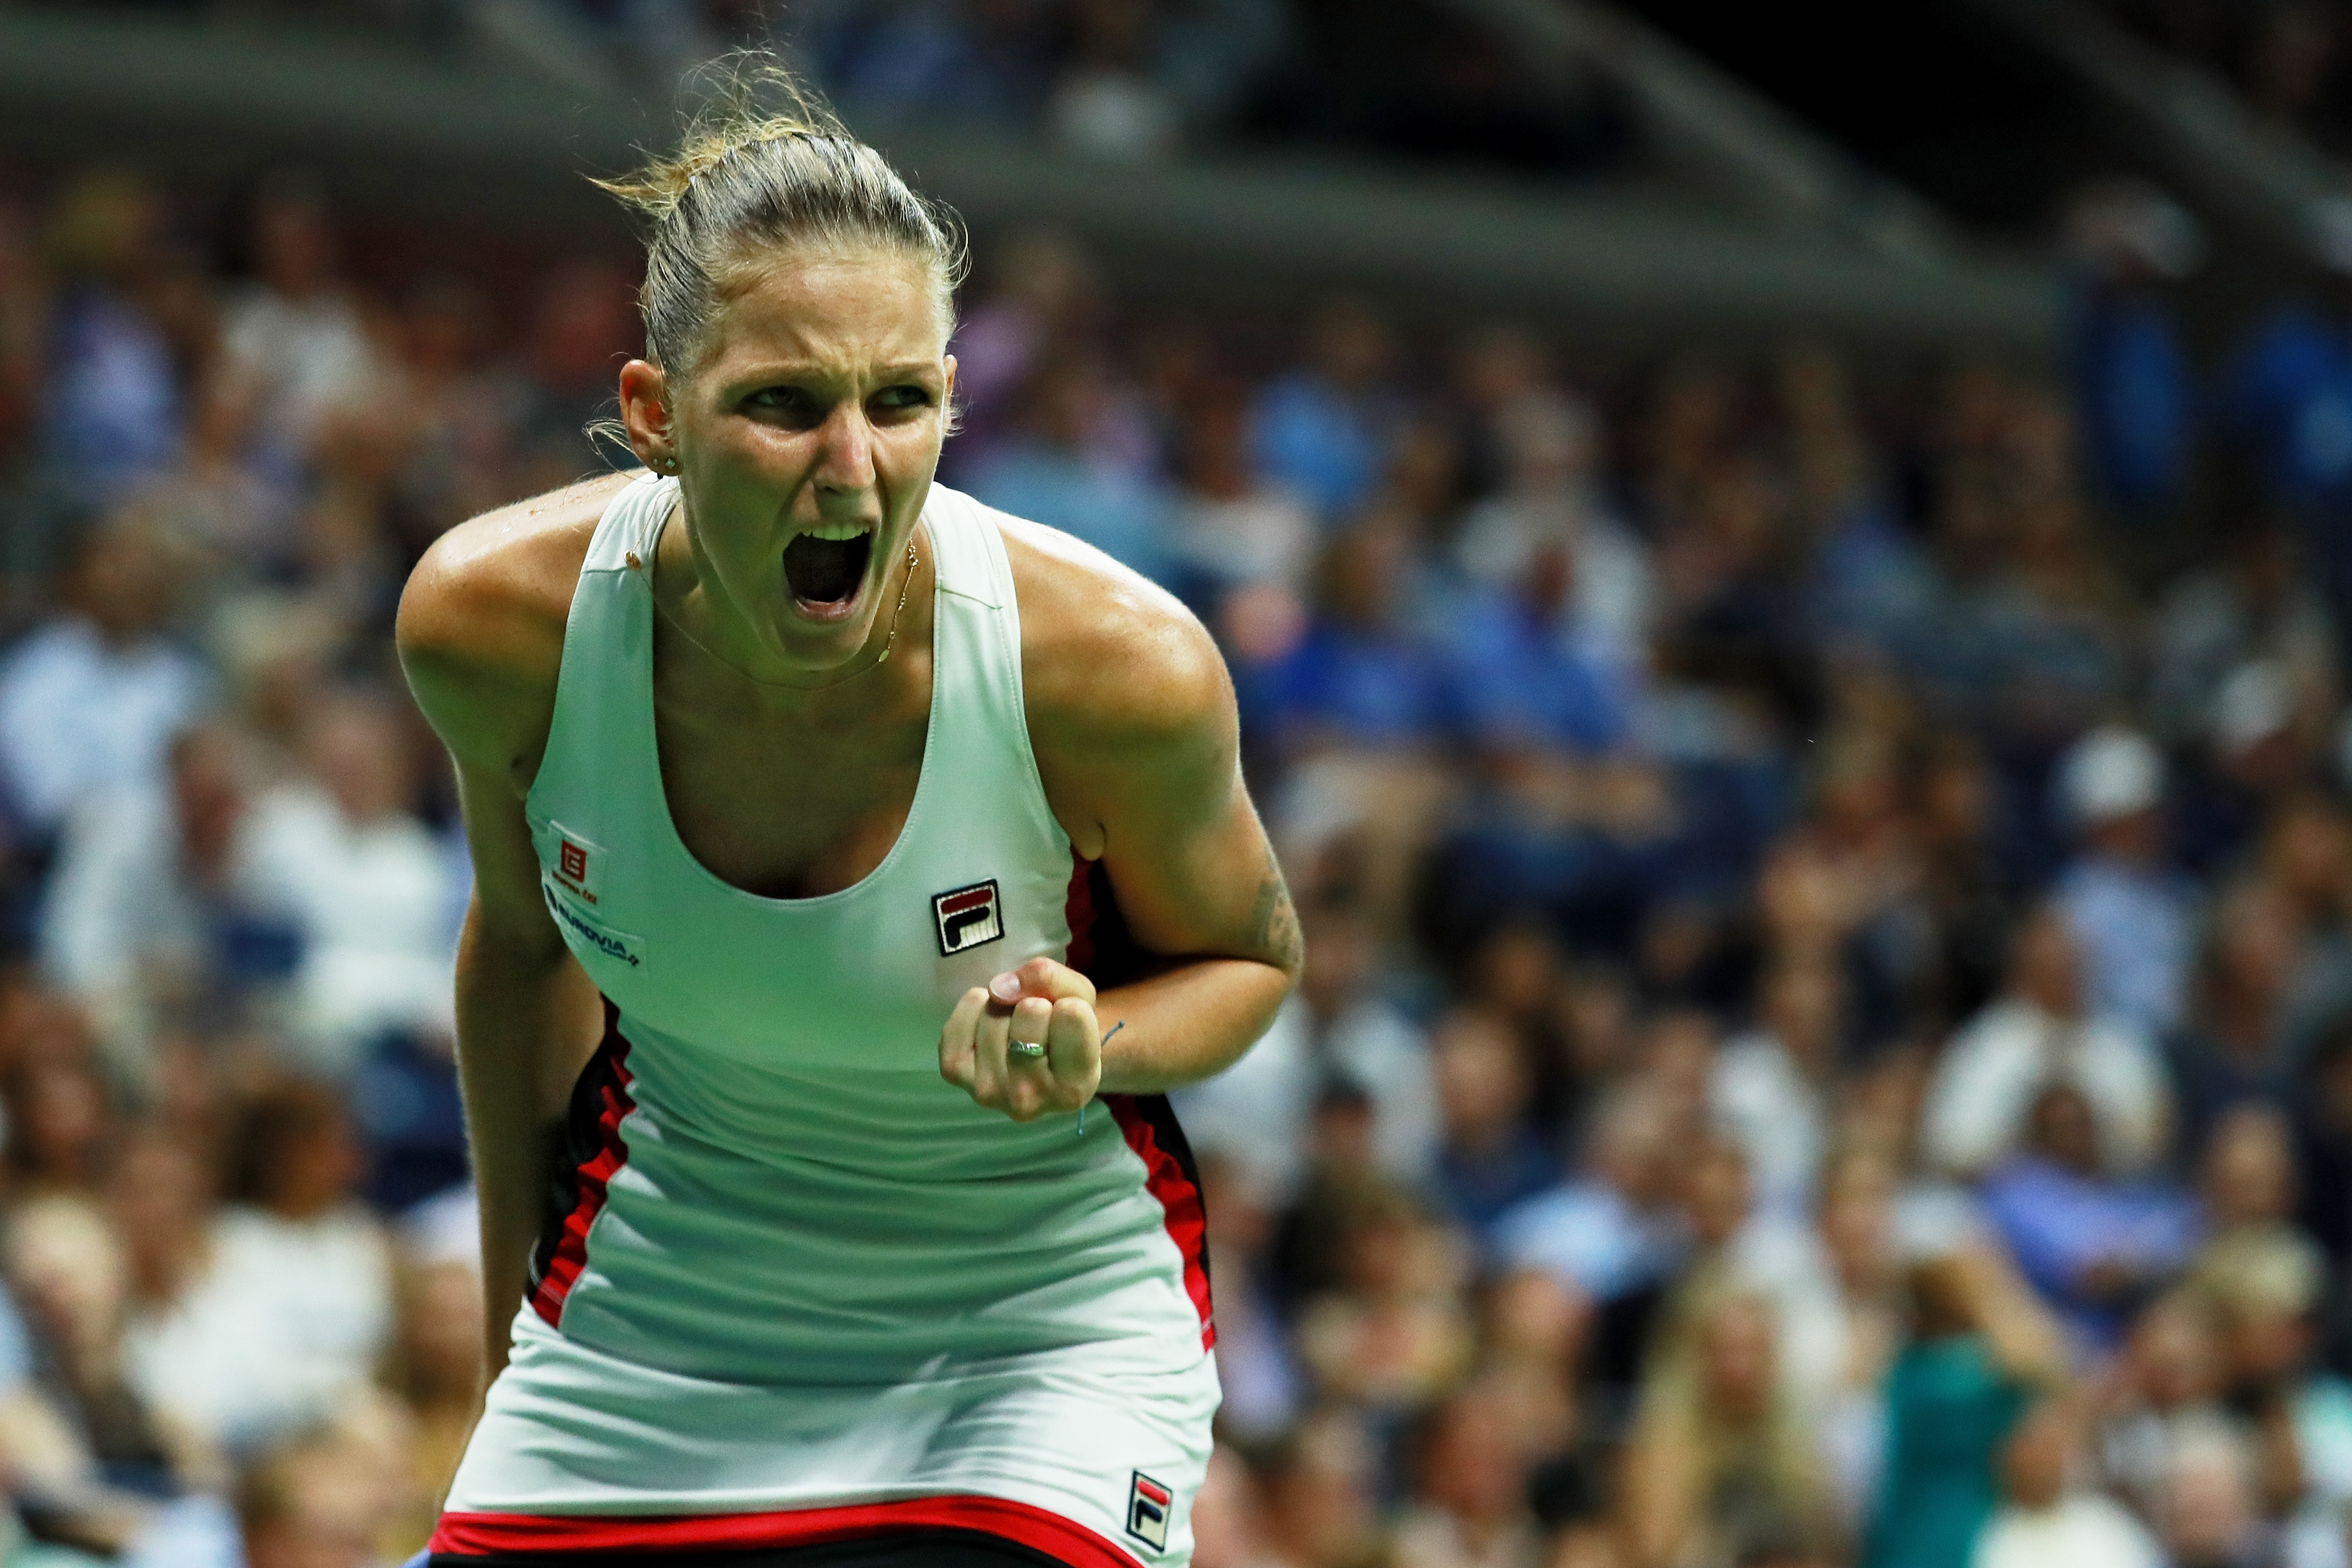 VIDEO | Karolina Pliskova shows insane rage after defeat, smashes holes in umpire’s chair